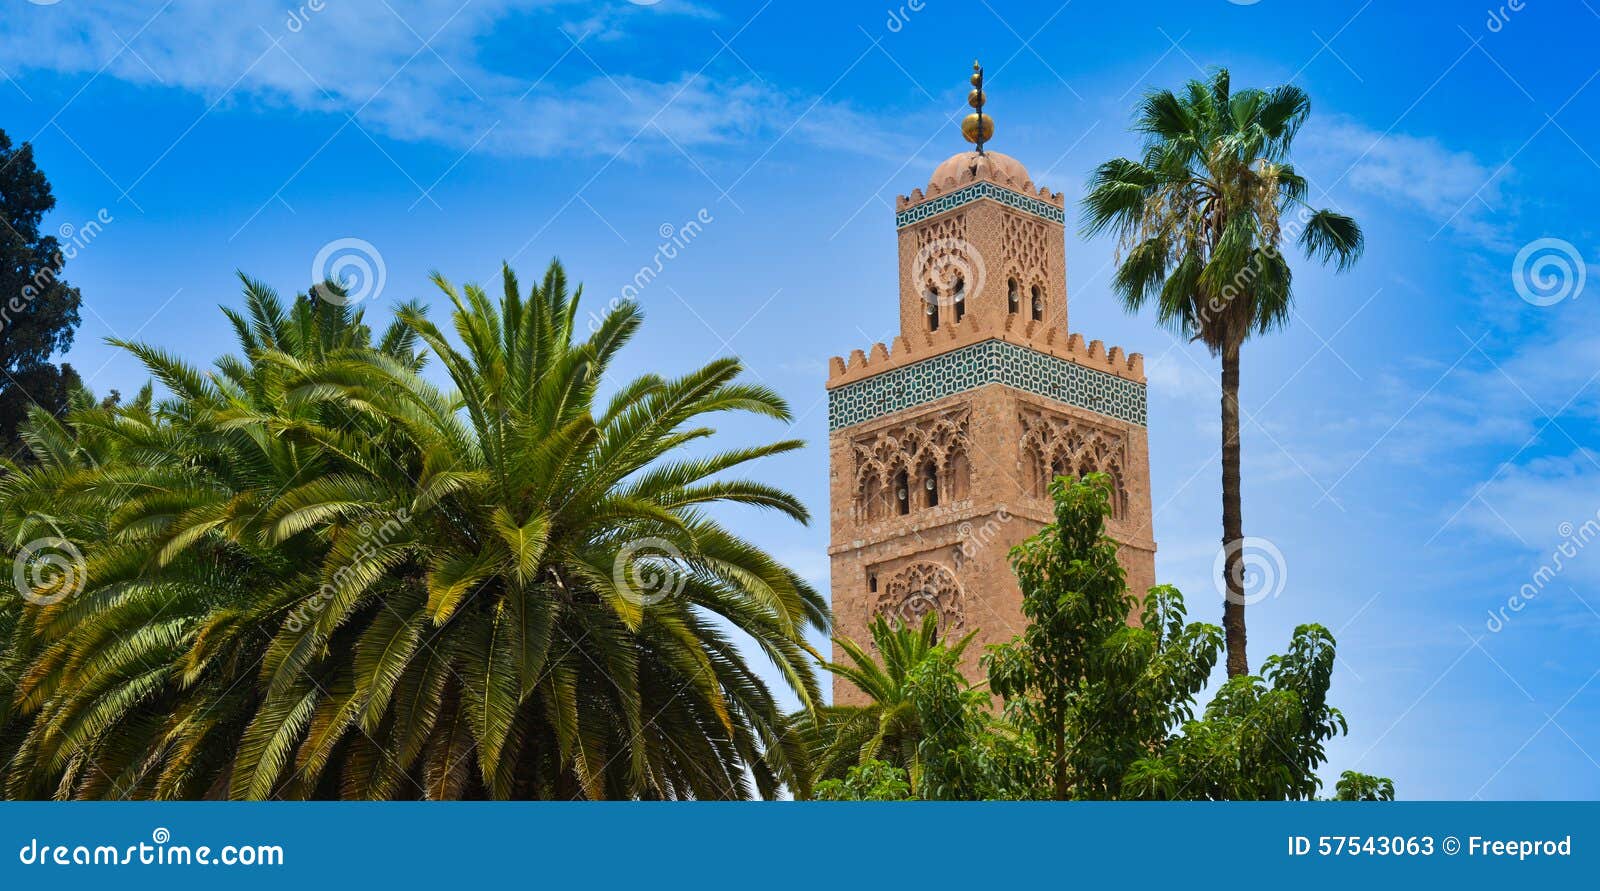 mosque of koutoubia in marrakech, morocco